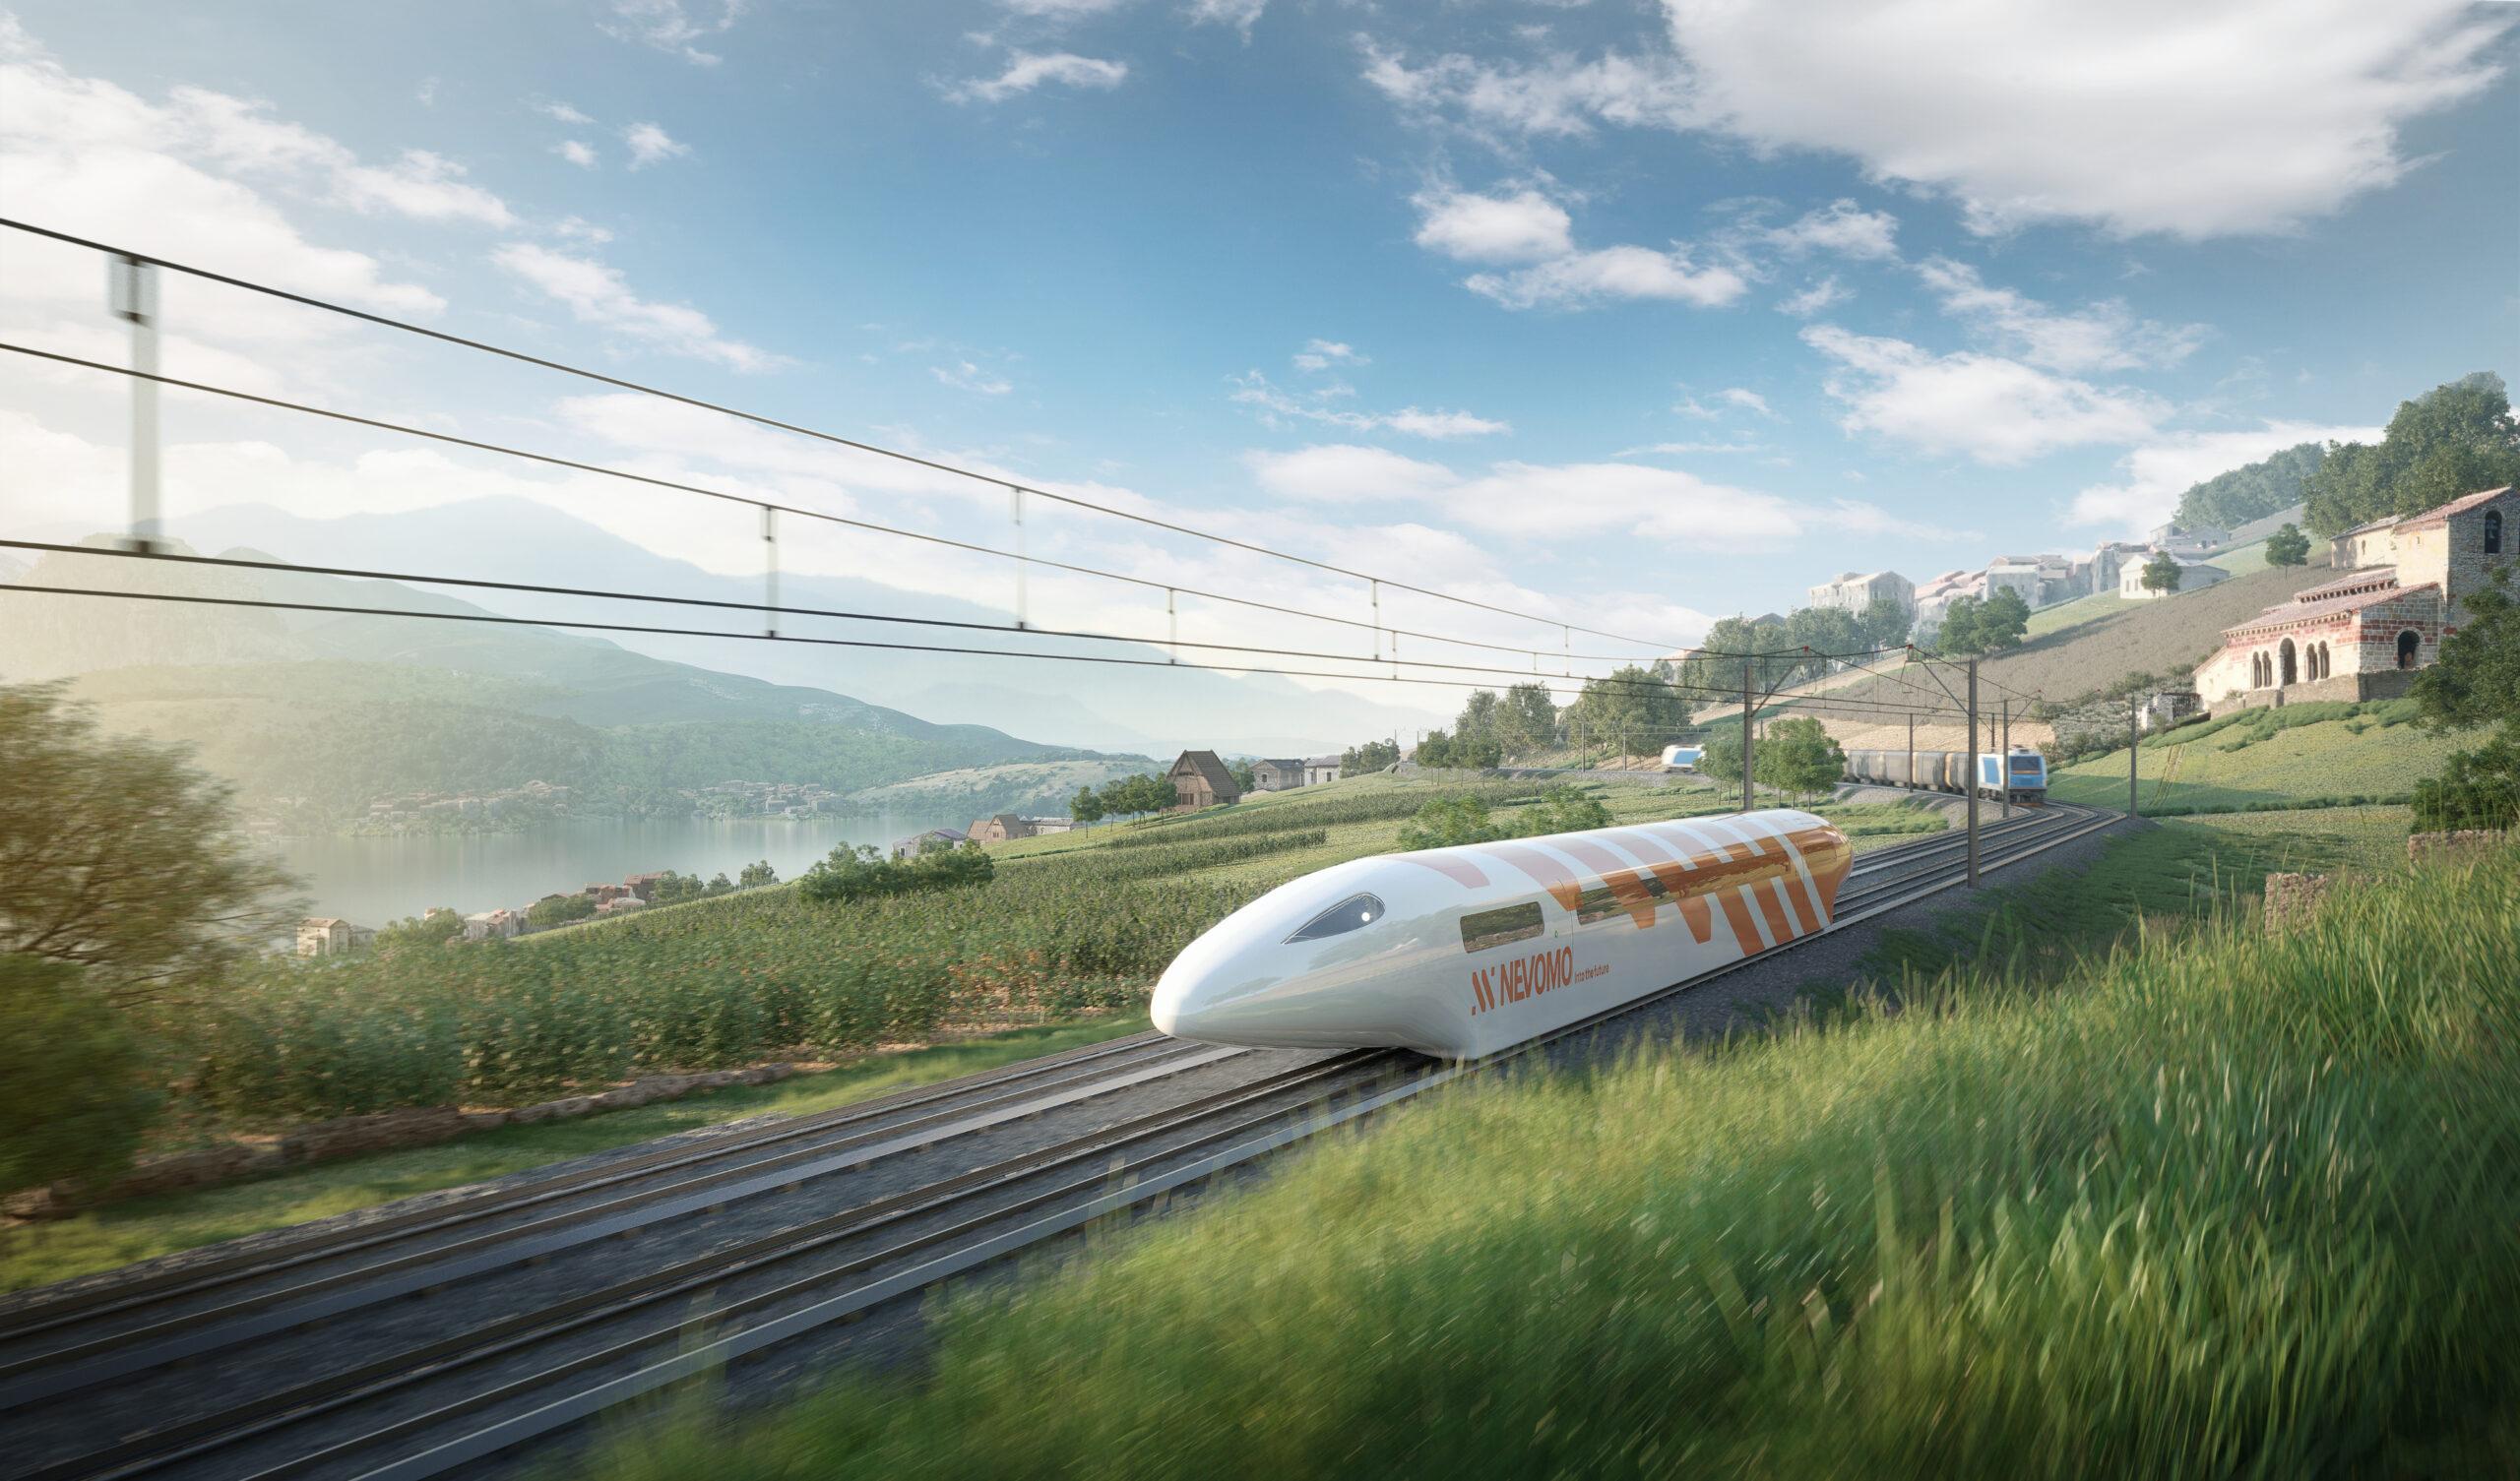 Nevomo – a hyperloop inspired upgrade for railways